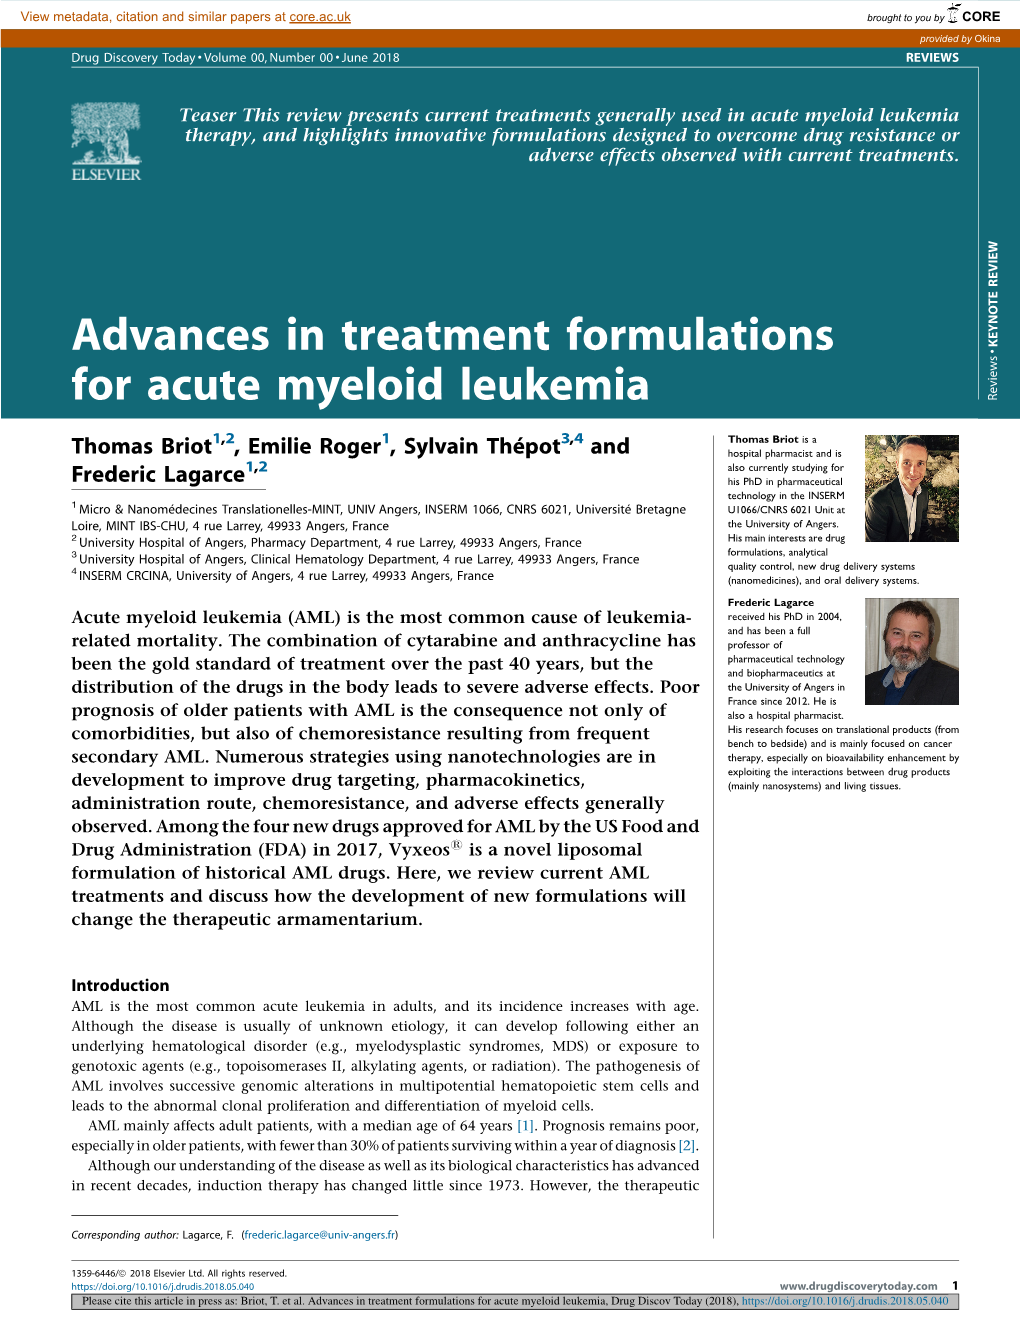 Advances in Treatment Formulations for Acute Myeloid Leukemia, Drug Discov Today (2018)